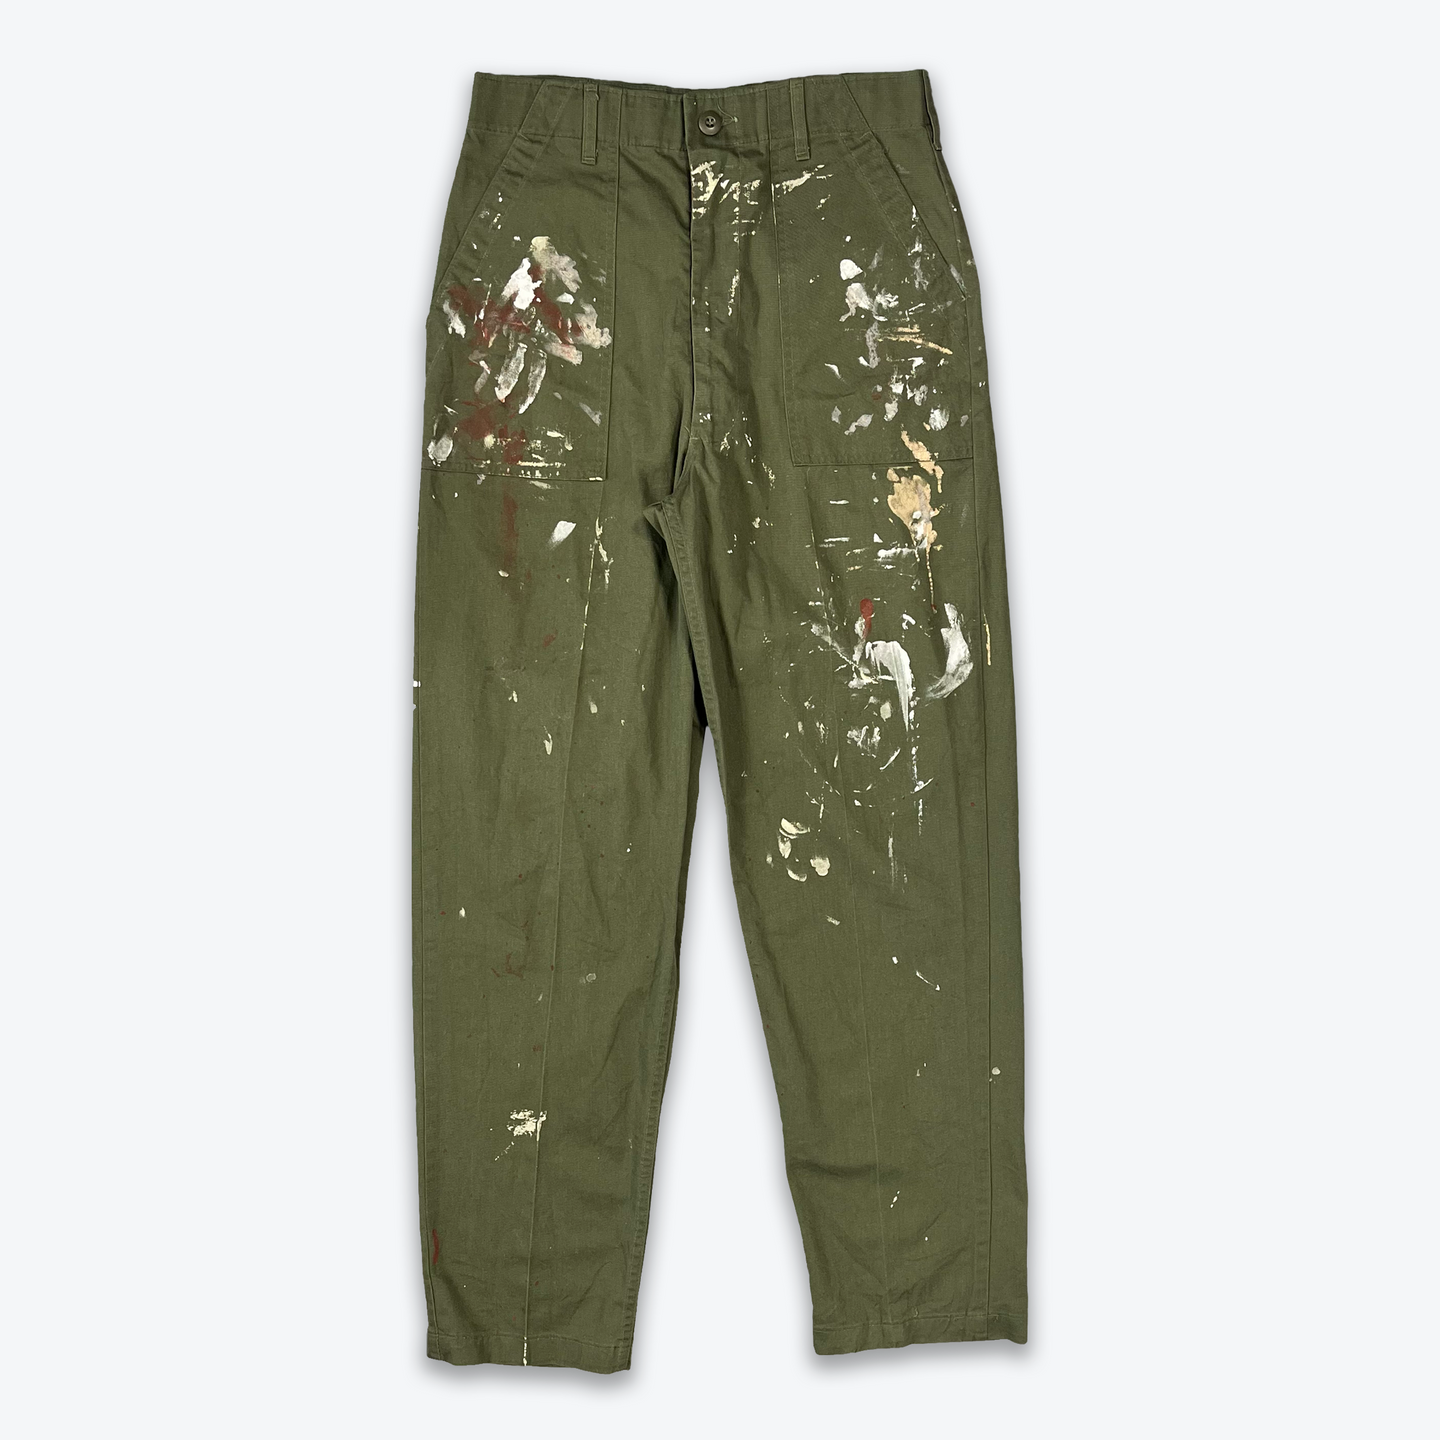 Vintage Military Pant's (Olive)